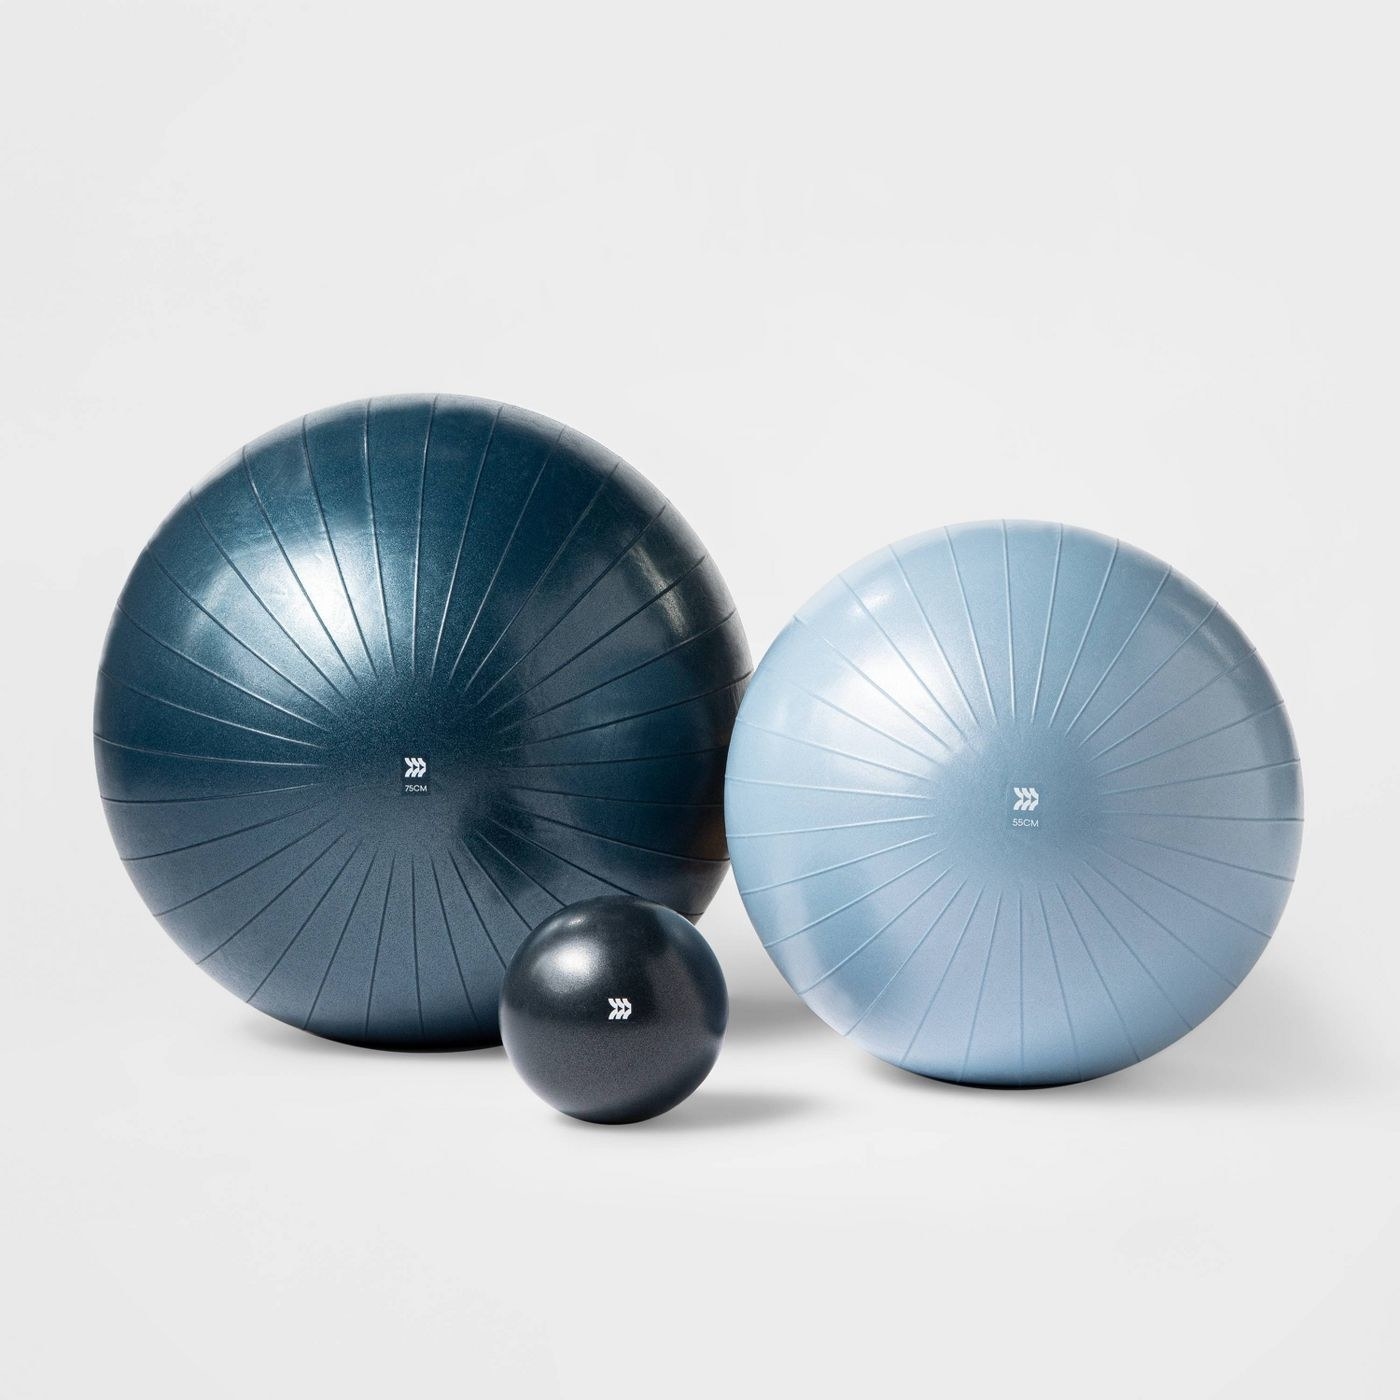 Three blue weighted balls